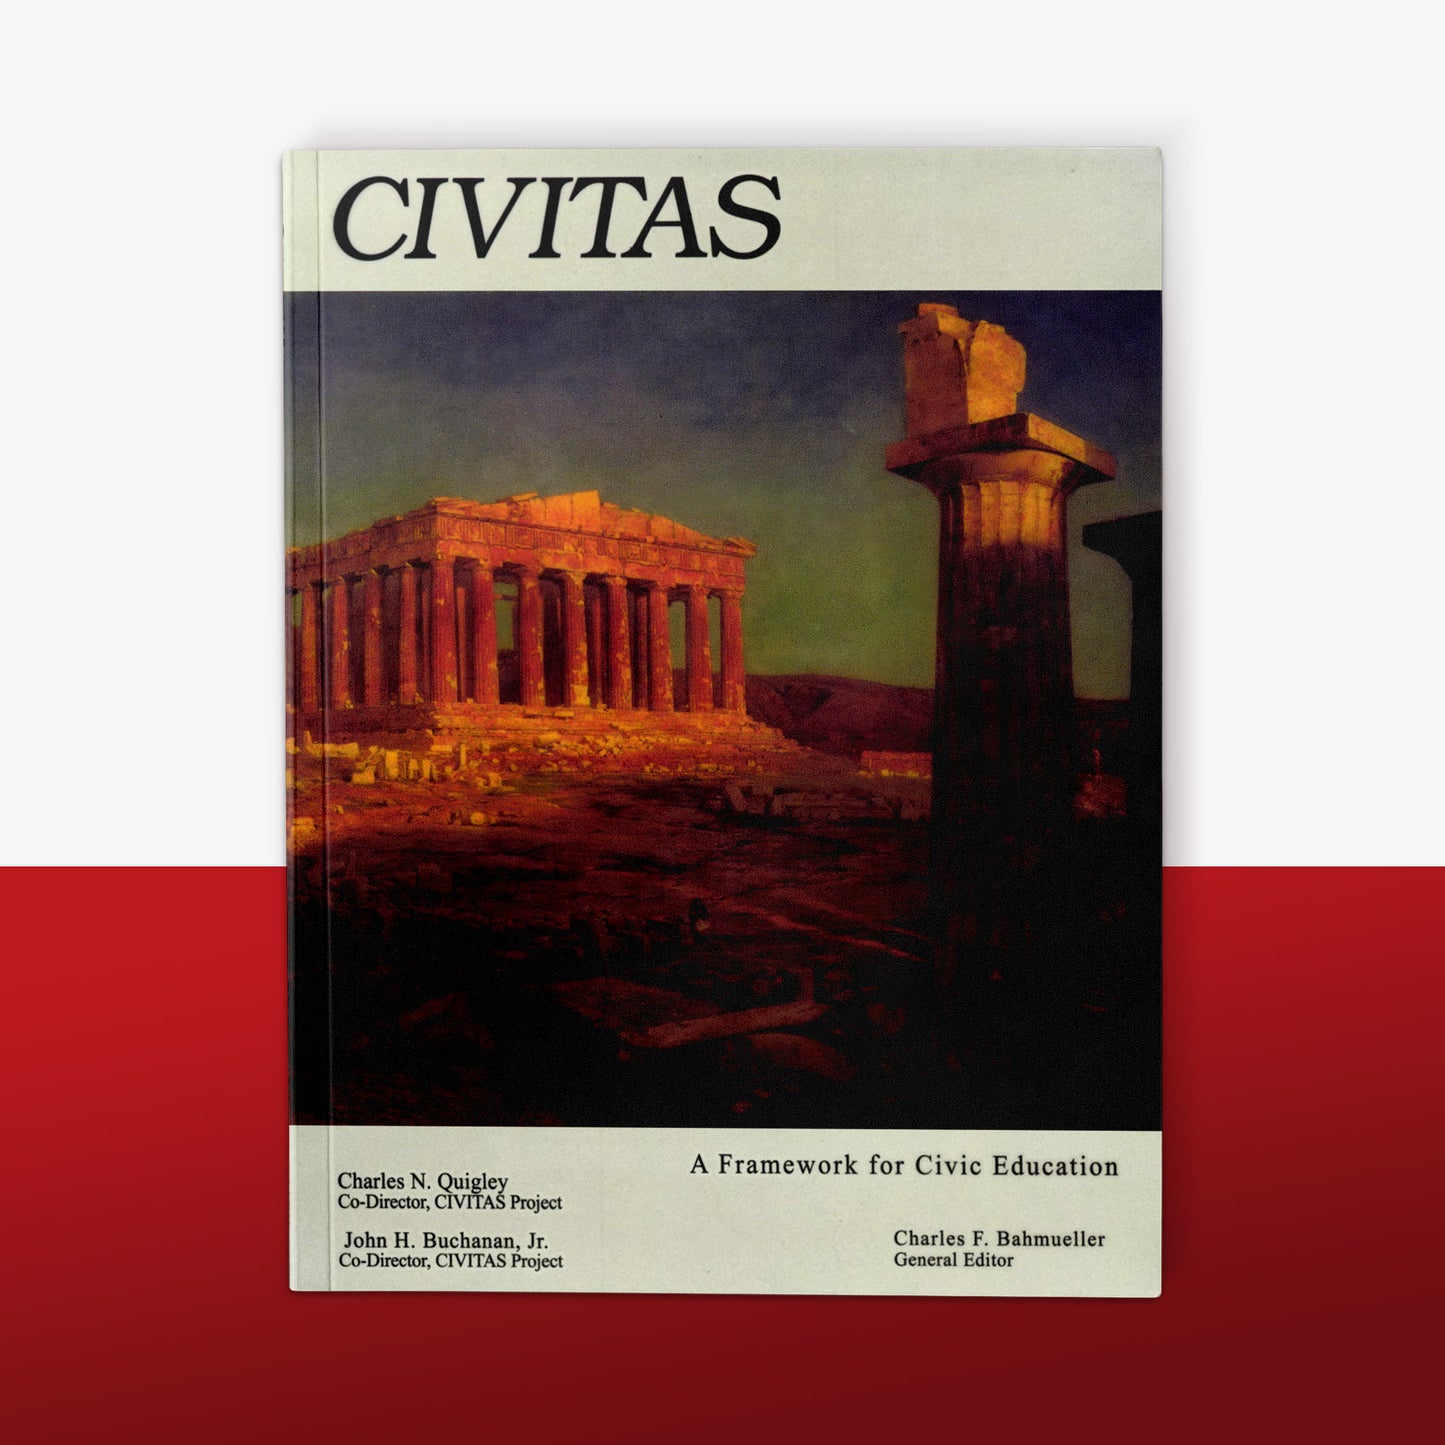 CIVITAS: A Framework for Civic Education